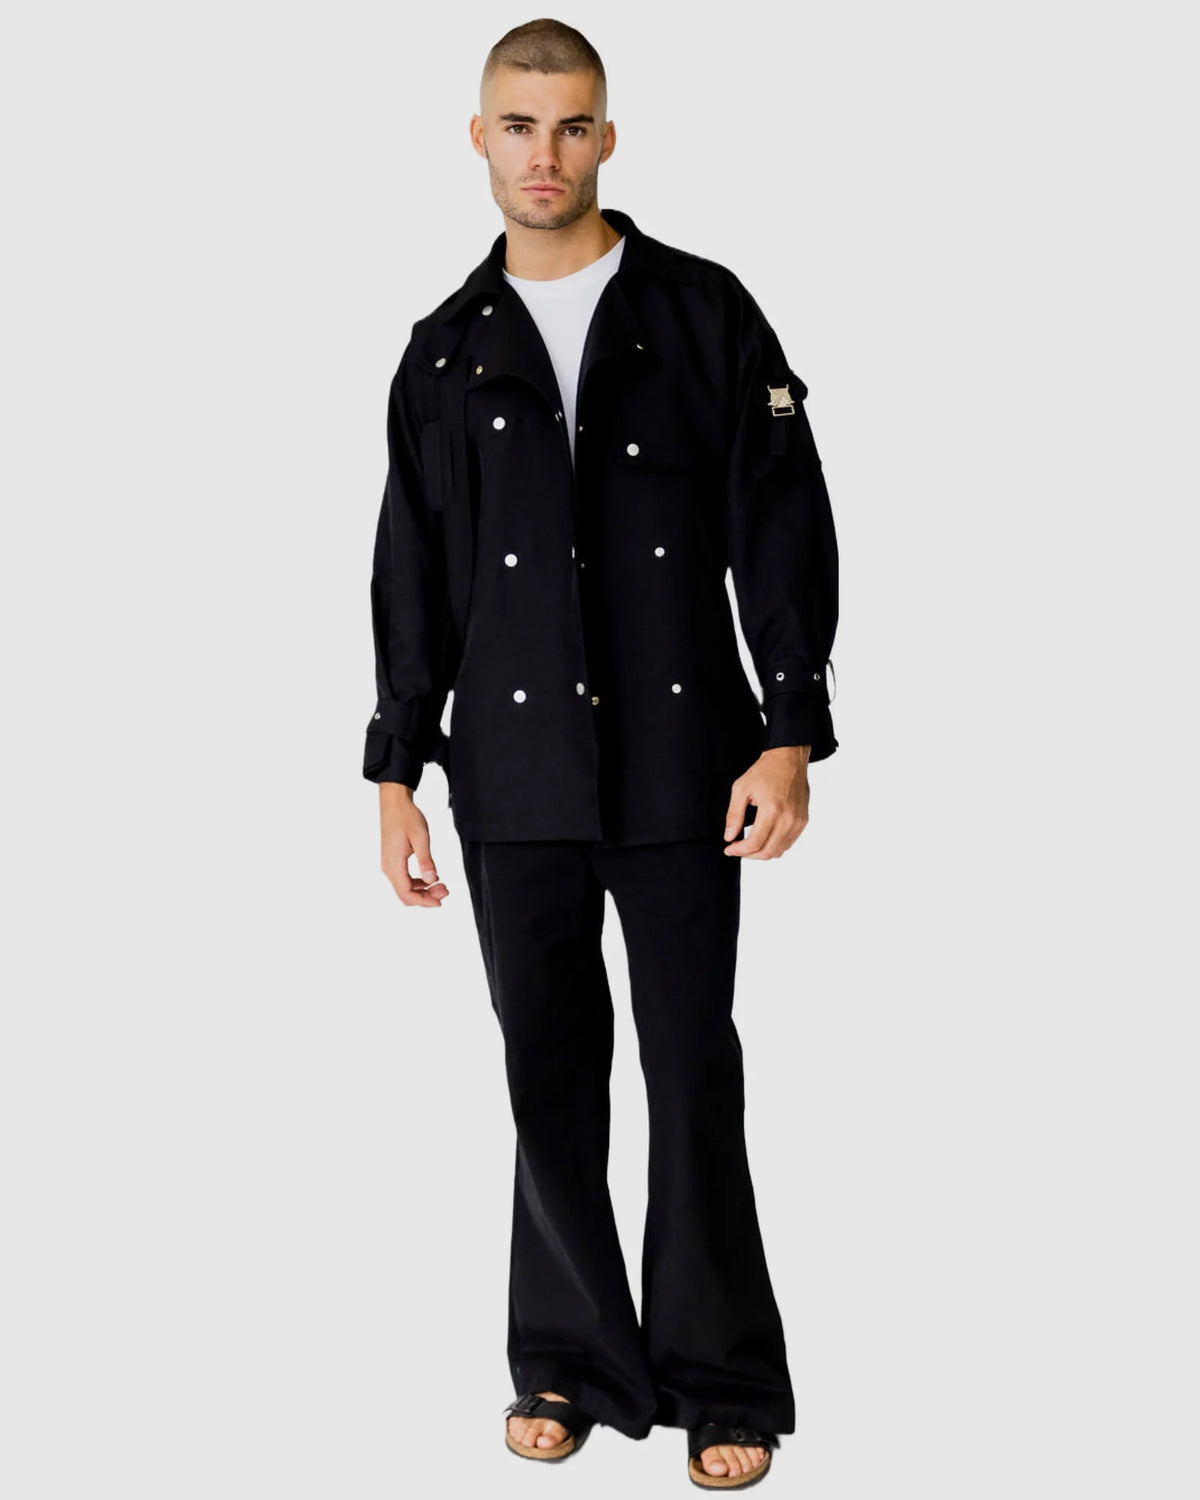 Justin Cassin Atticus Military Jacket in Black Color 2